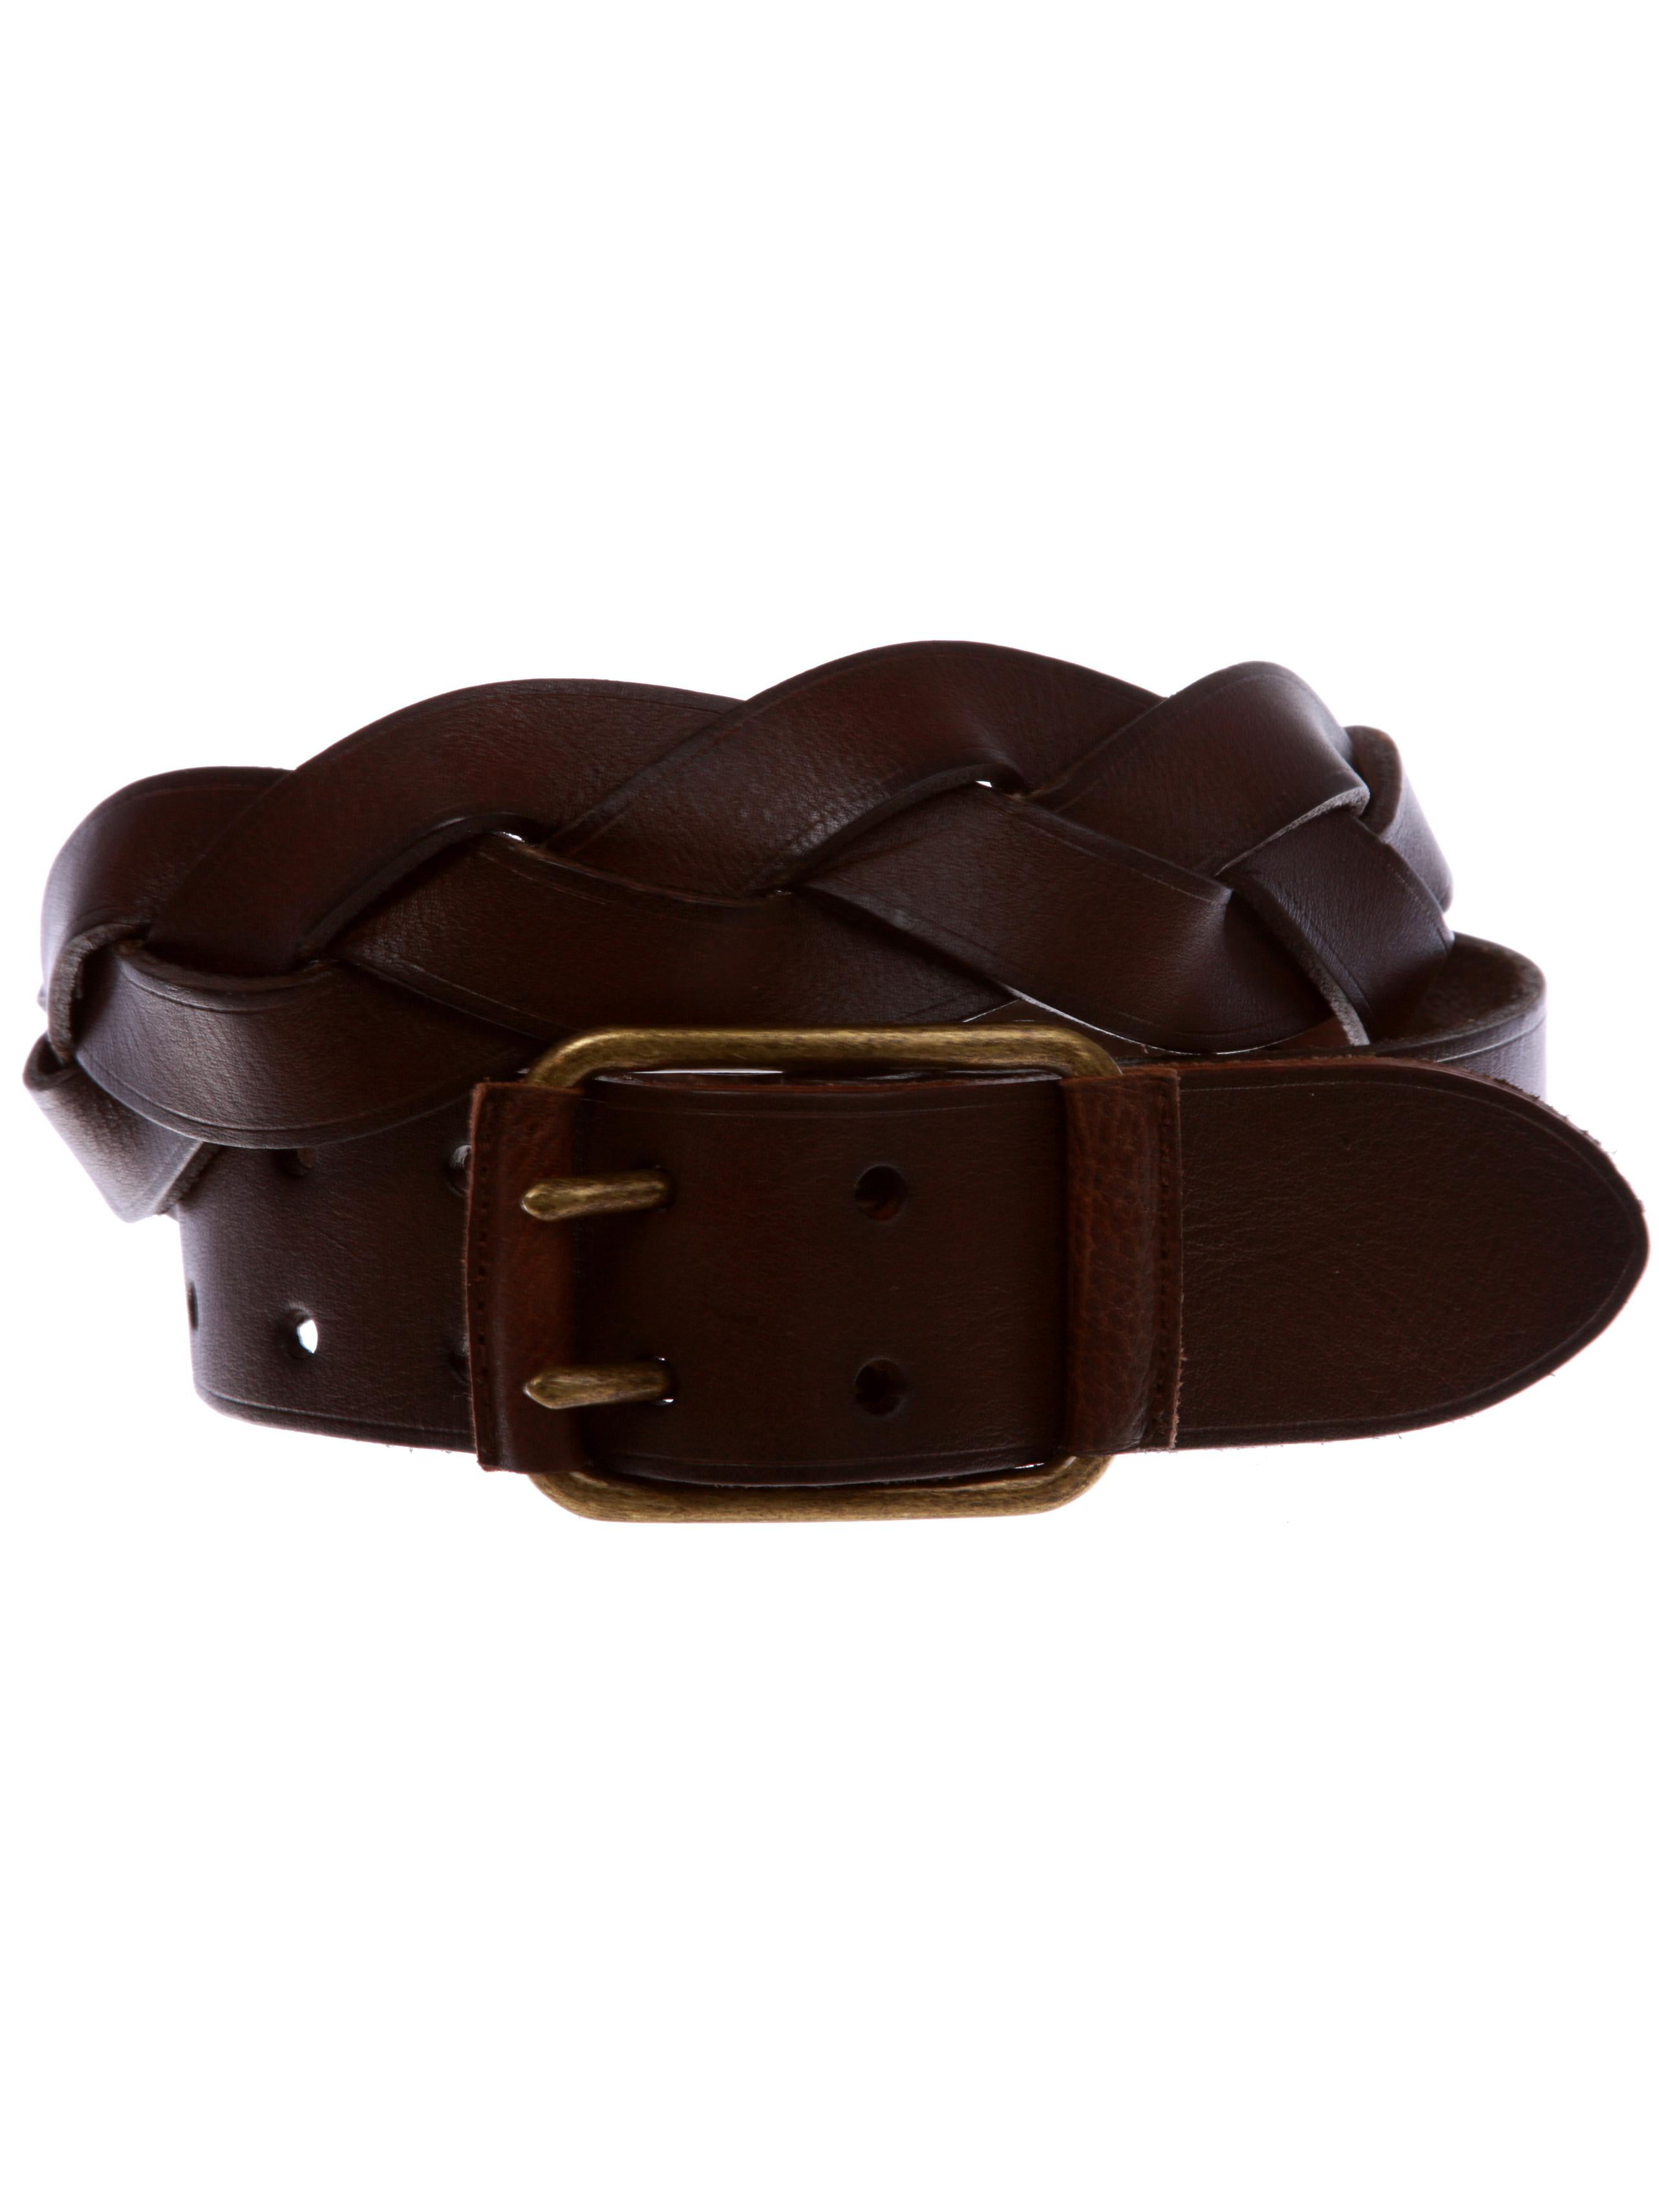 Designer Genuine Leather Belt For Women And Men High Quality 3.0cm